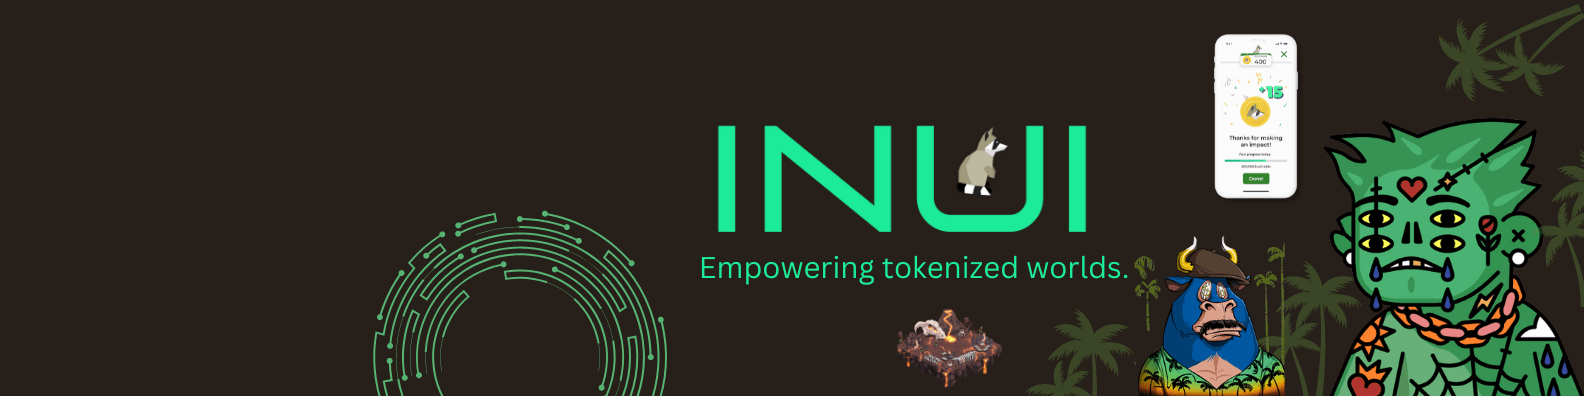 inui_digital banner